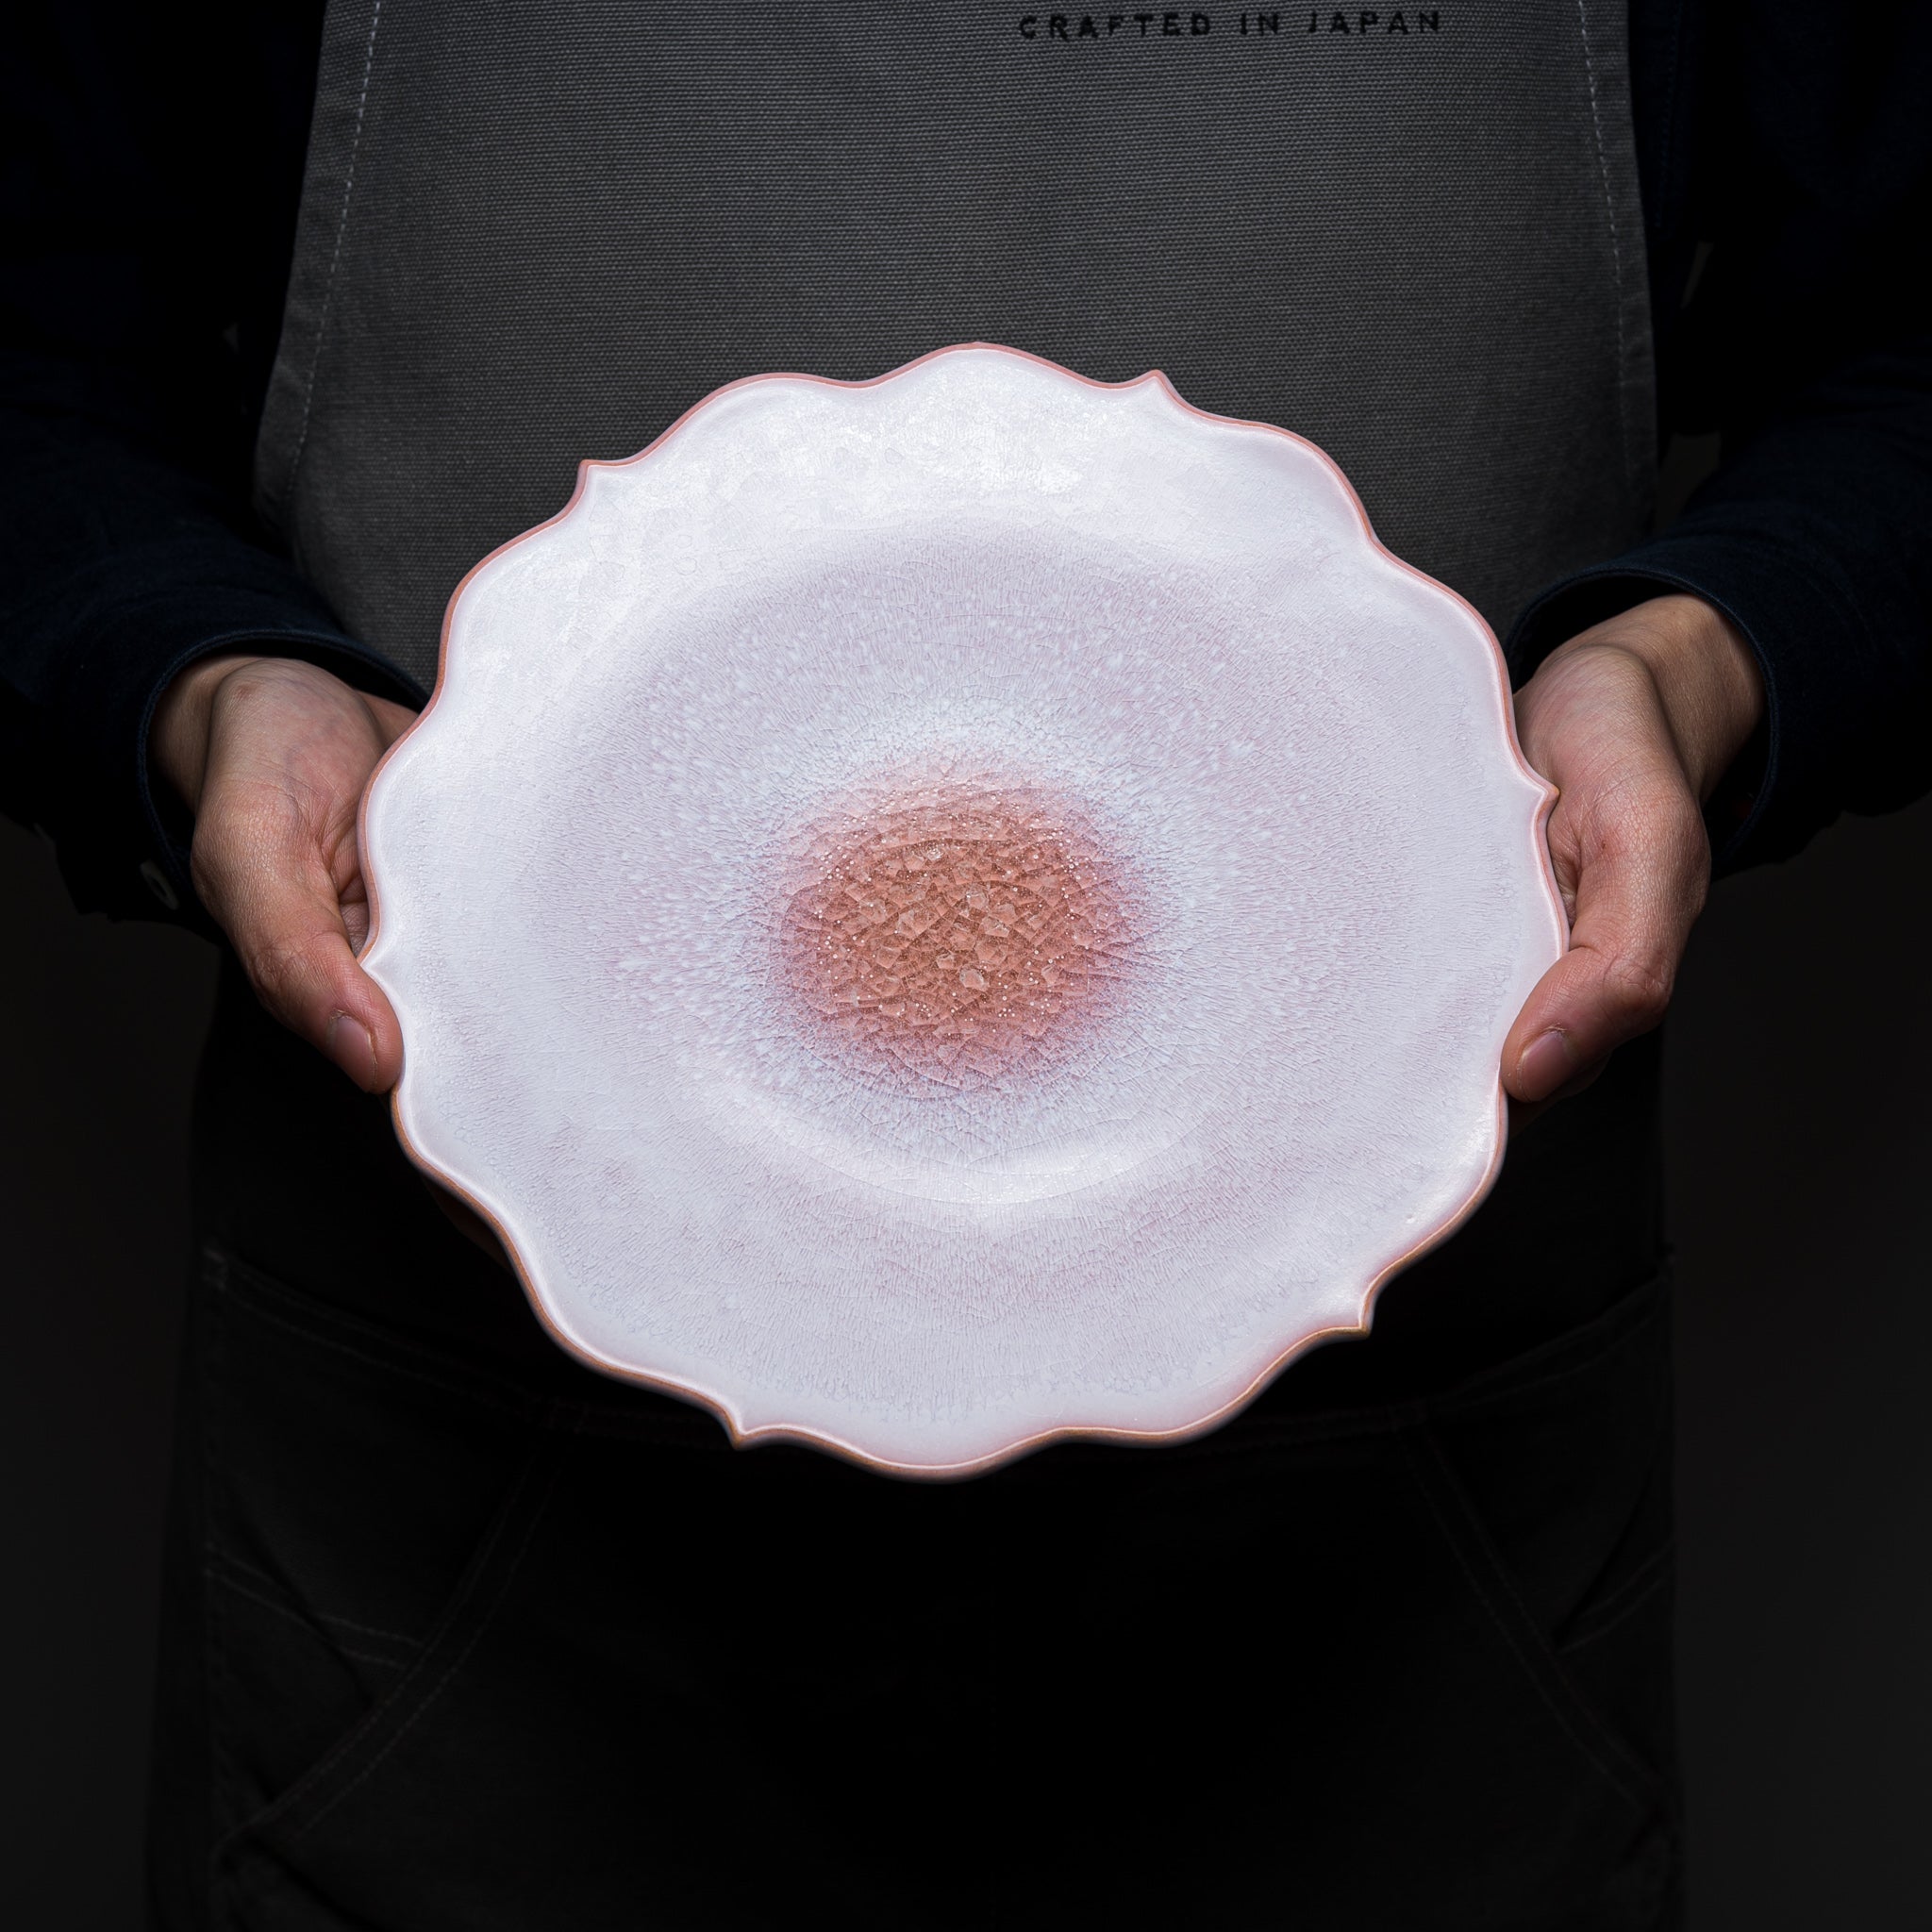 Tenryu Kiln Hagi Ware - Flower Plate - Milky Pink / 天龍窯 モモイロ